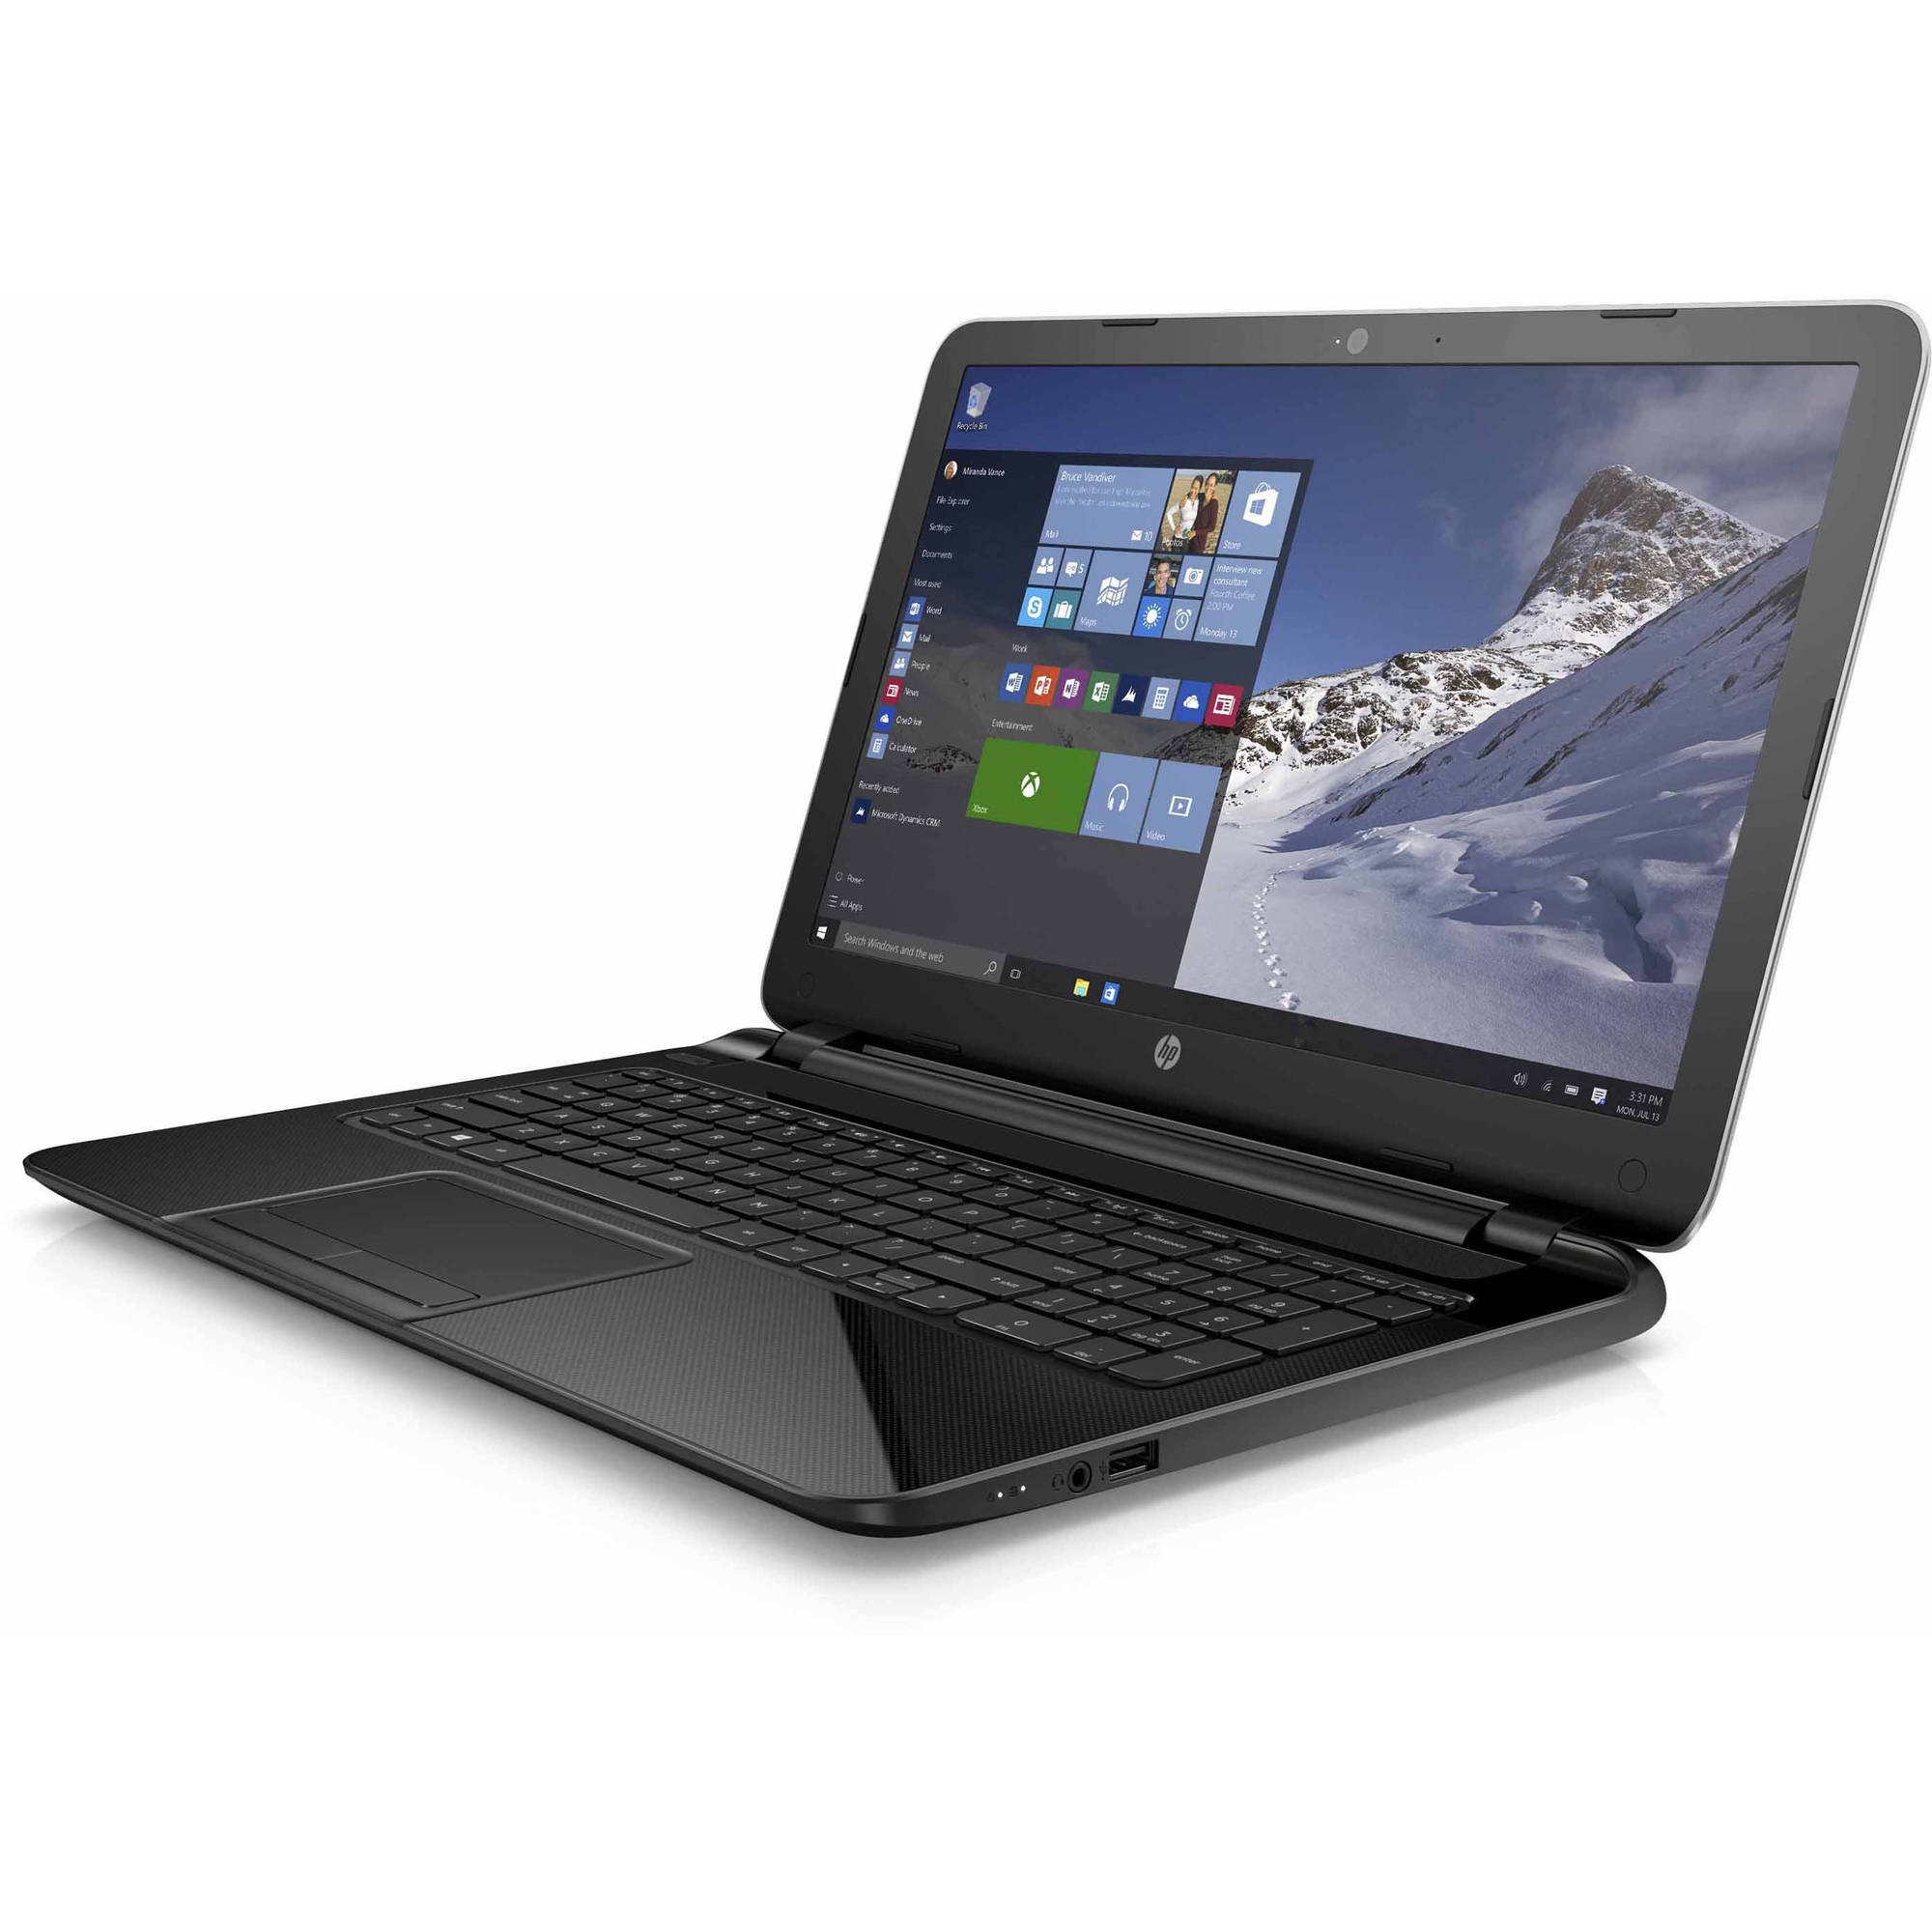 Laptop Hp 15 F233wm 156 Intel Celeron N3050 Sklep Prolinepl 6960